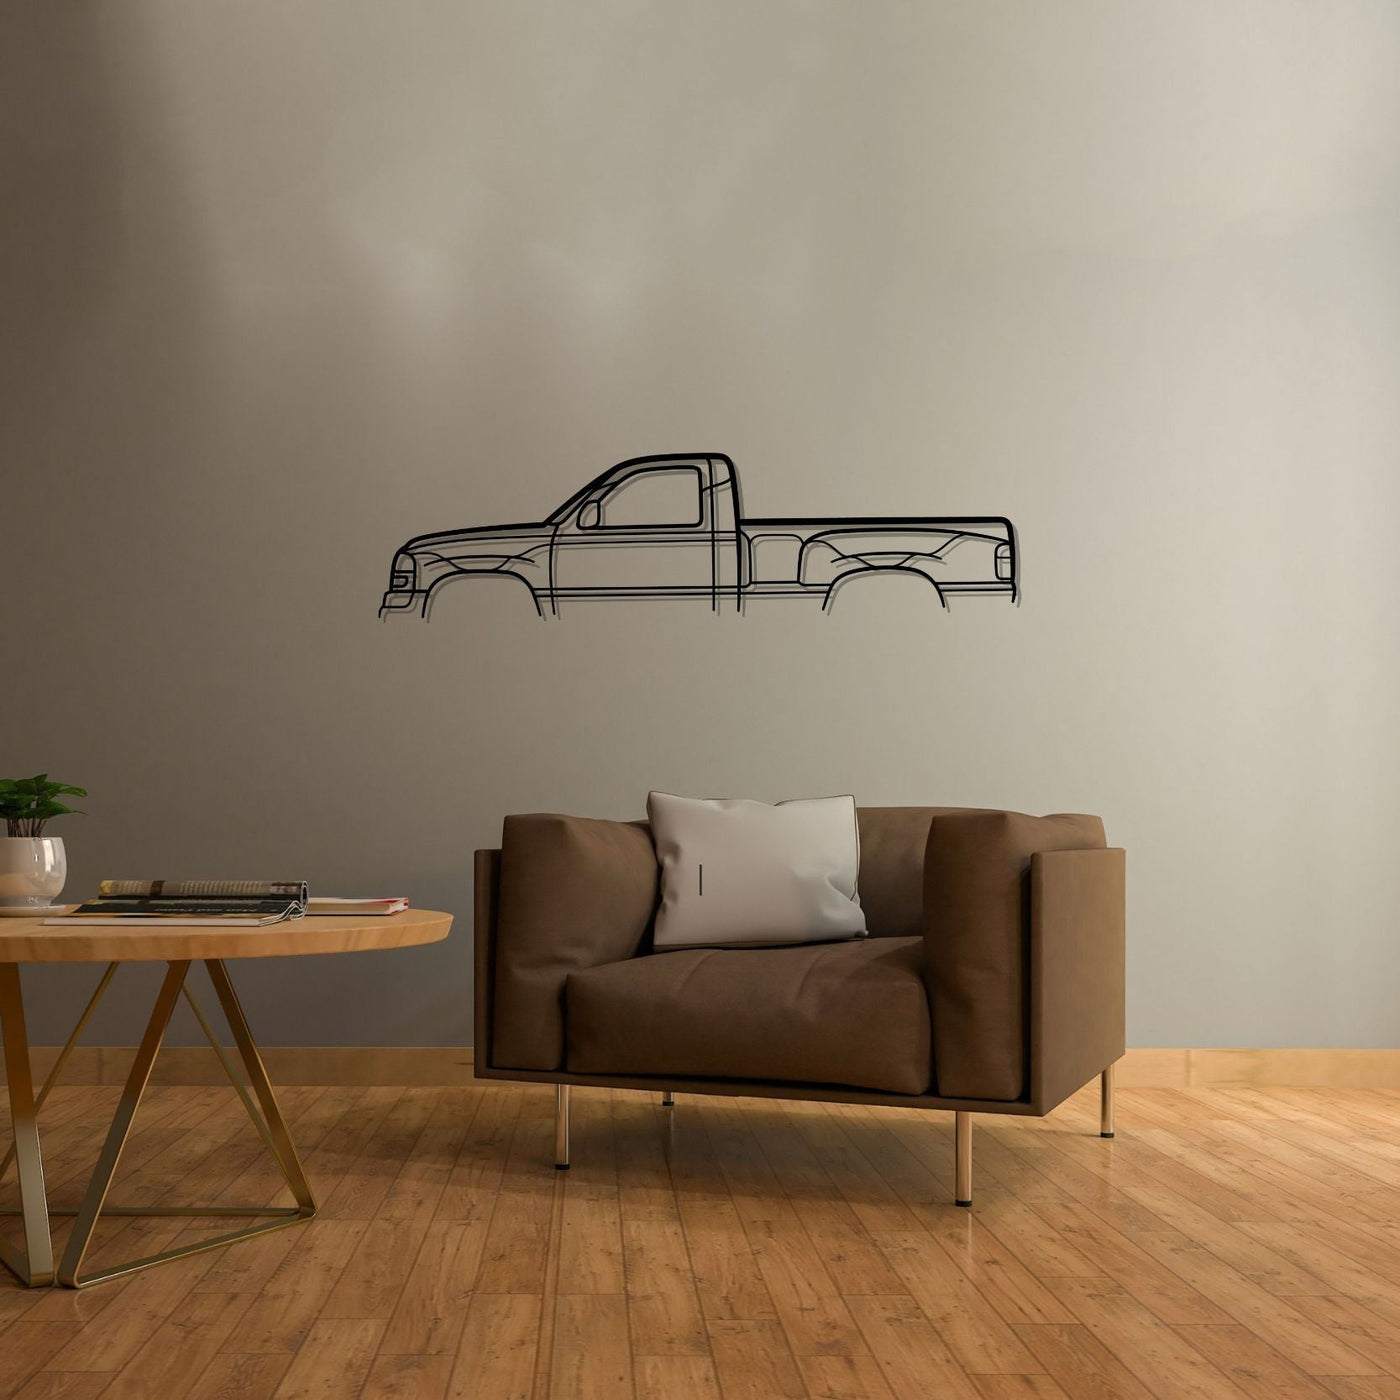 Sierra Single Cab Classic Silhouette Metal Wall Art